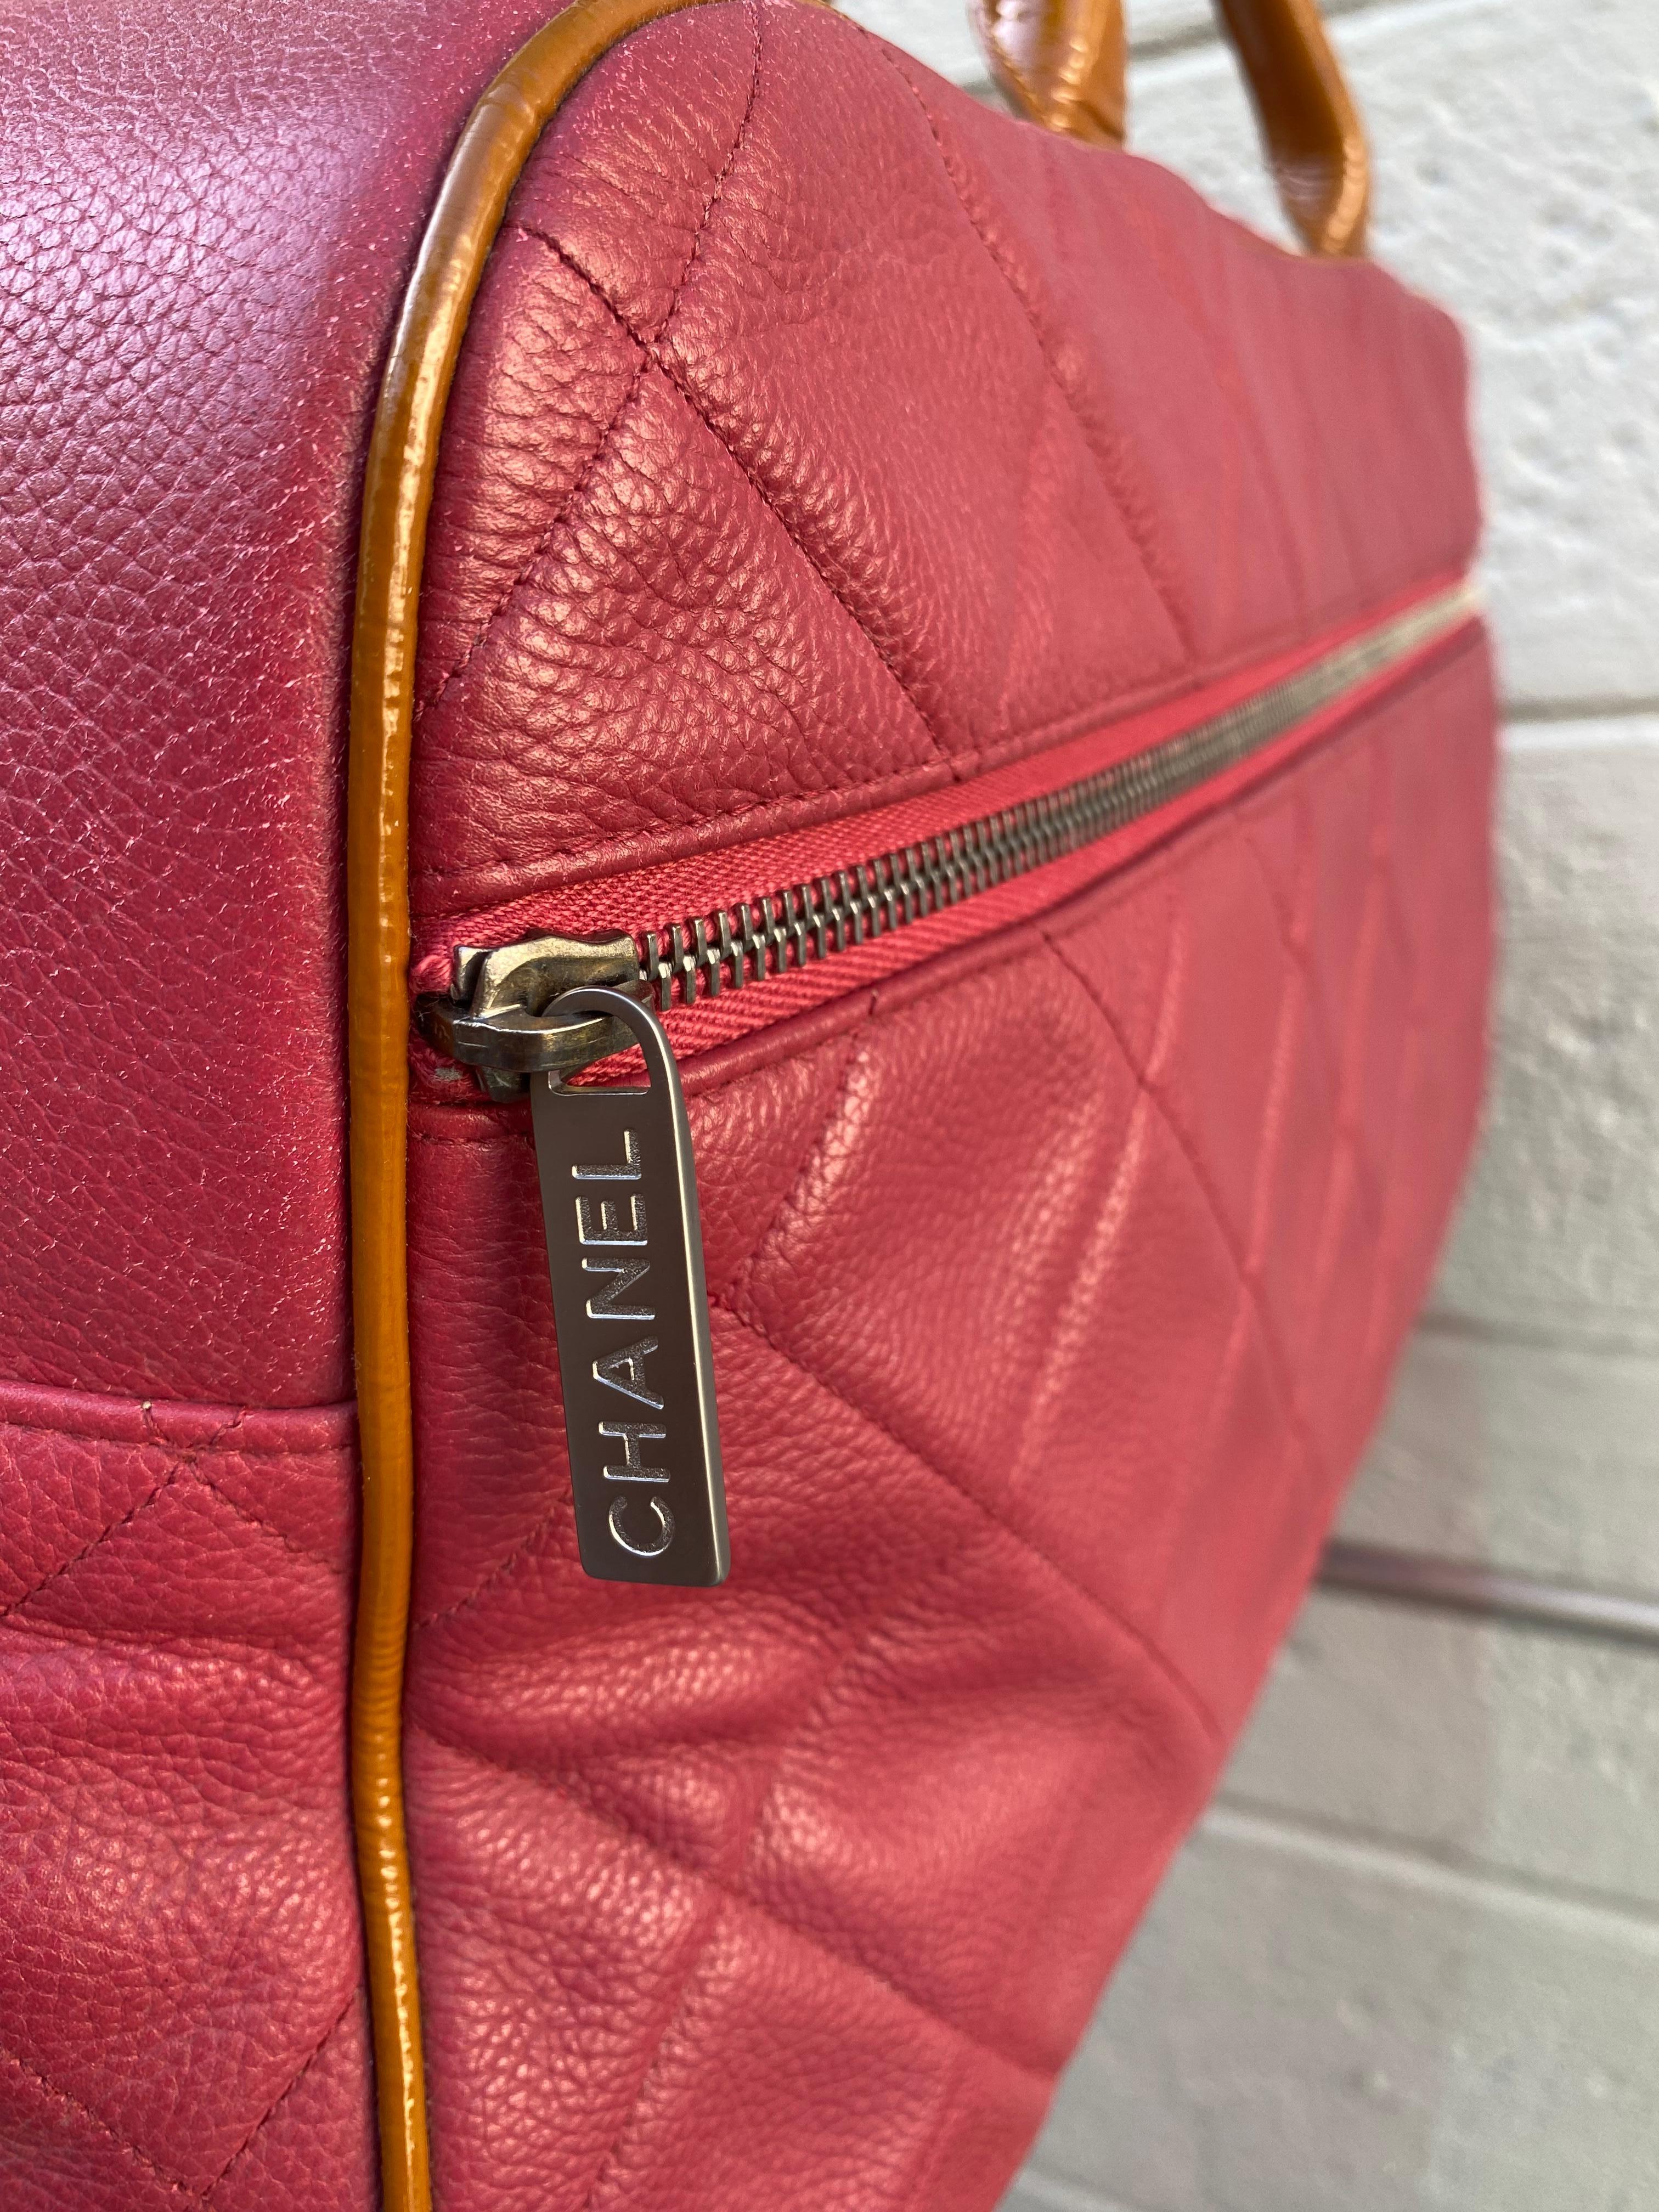 Chanel Rare Vintage Raspberry Pink Caviar Weekender Travel Duffle Shopper Bag For Sale 7